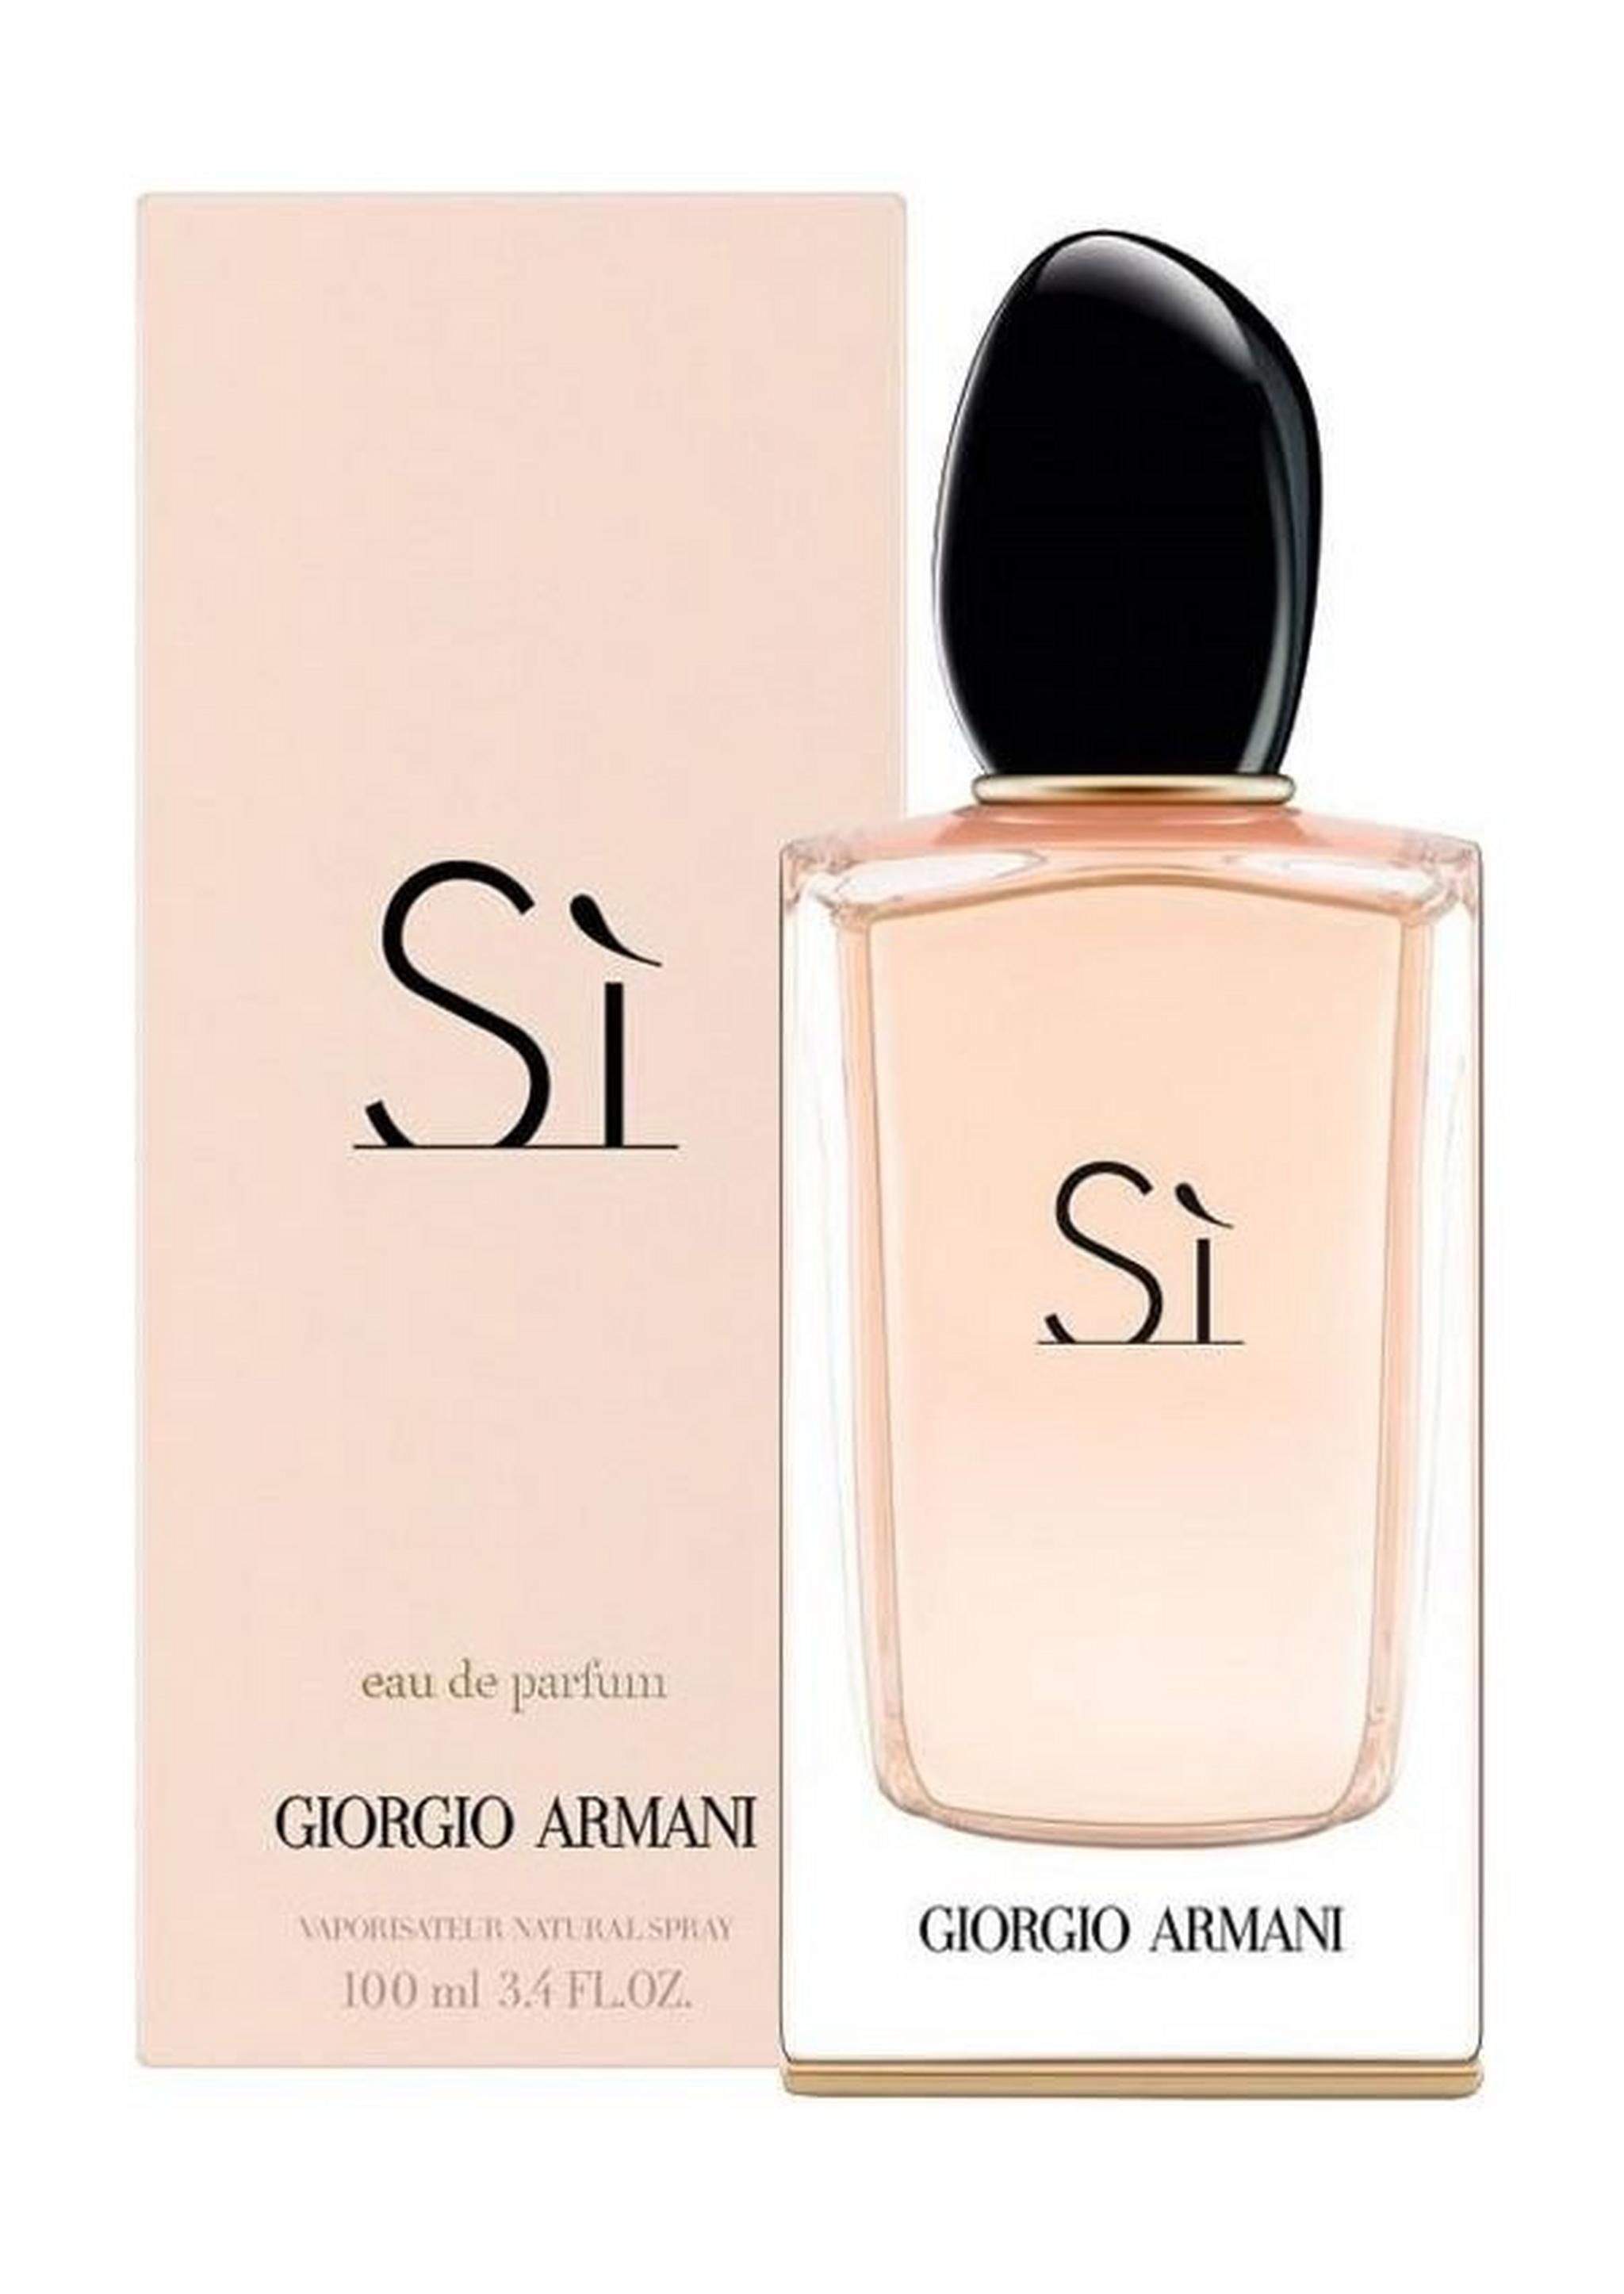 Giorgio Armani Si for Women Eau de Parfum 100ml